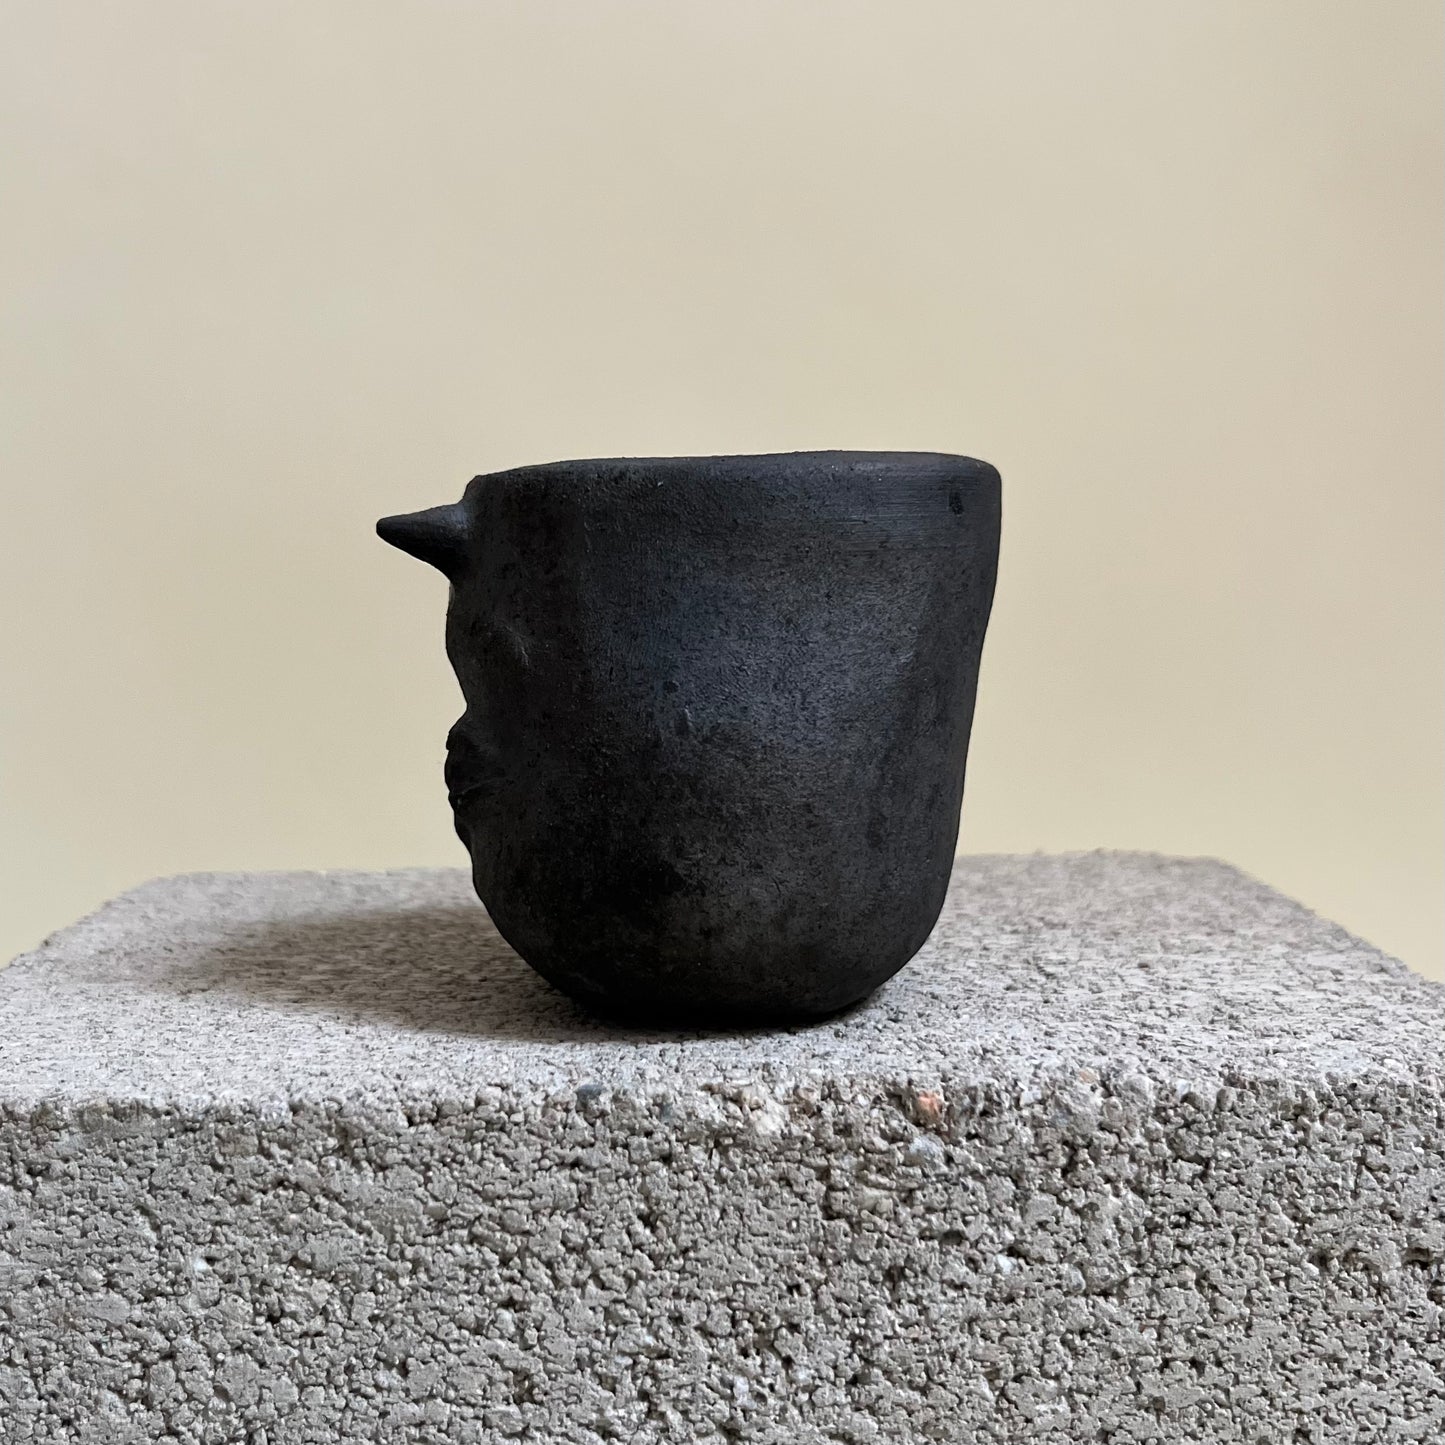 Diablo Ceramic Mezcalero by Derrumbe